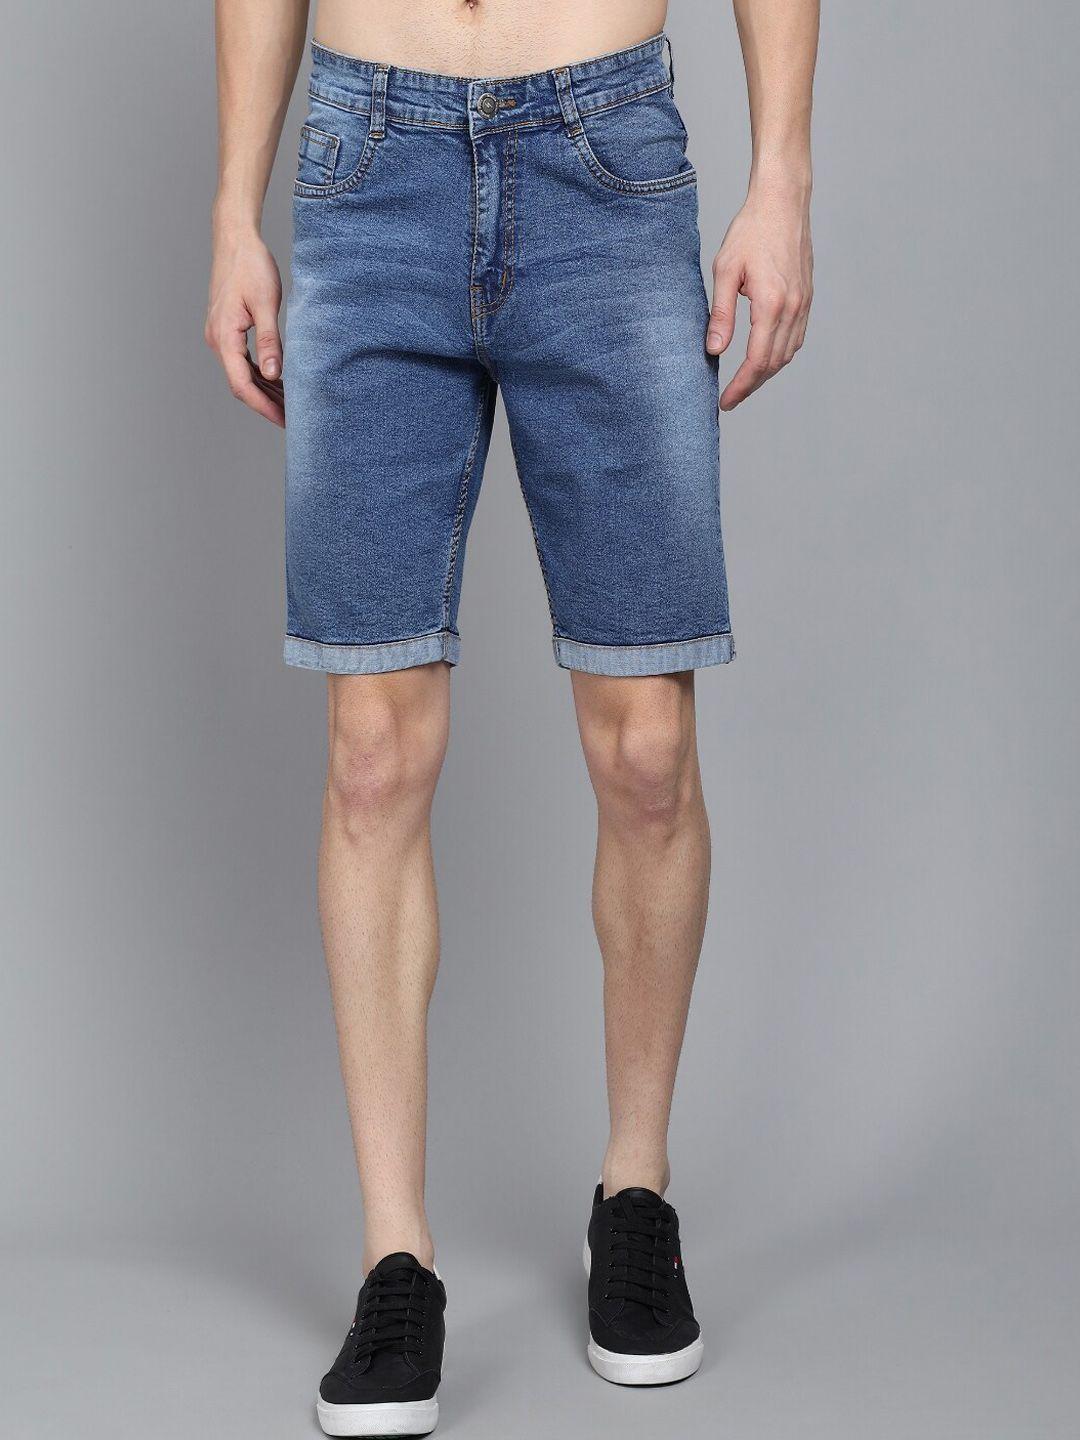 studio-nexx-men-blue-washed-denim-denim-shorts-technology